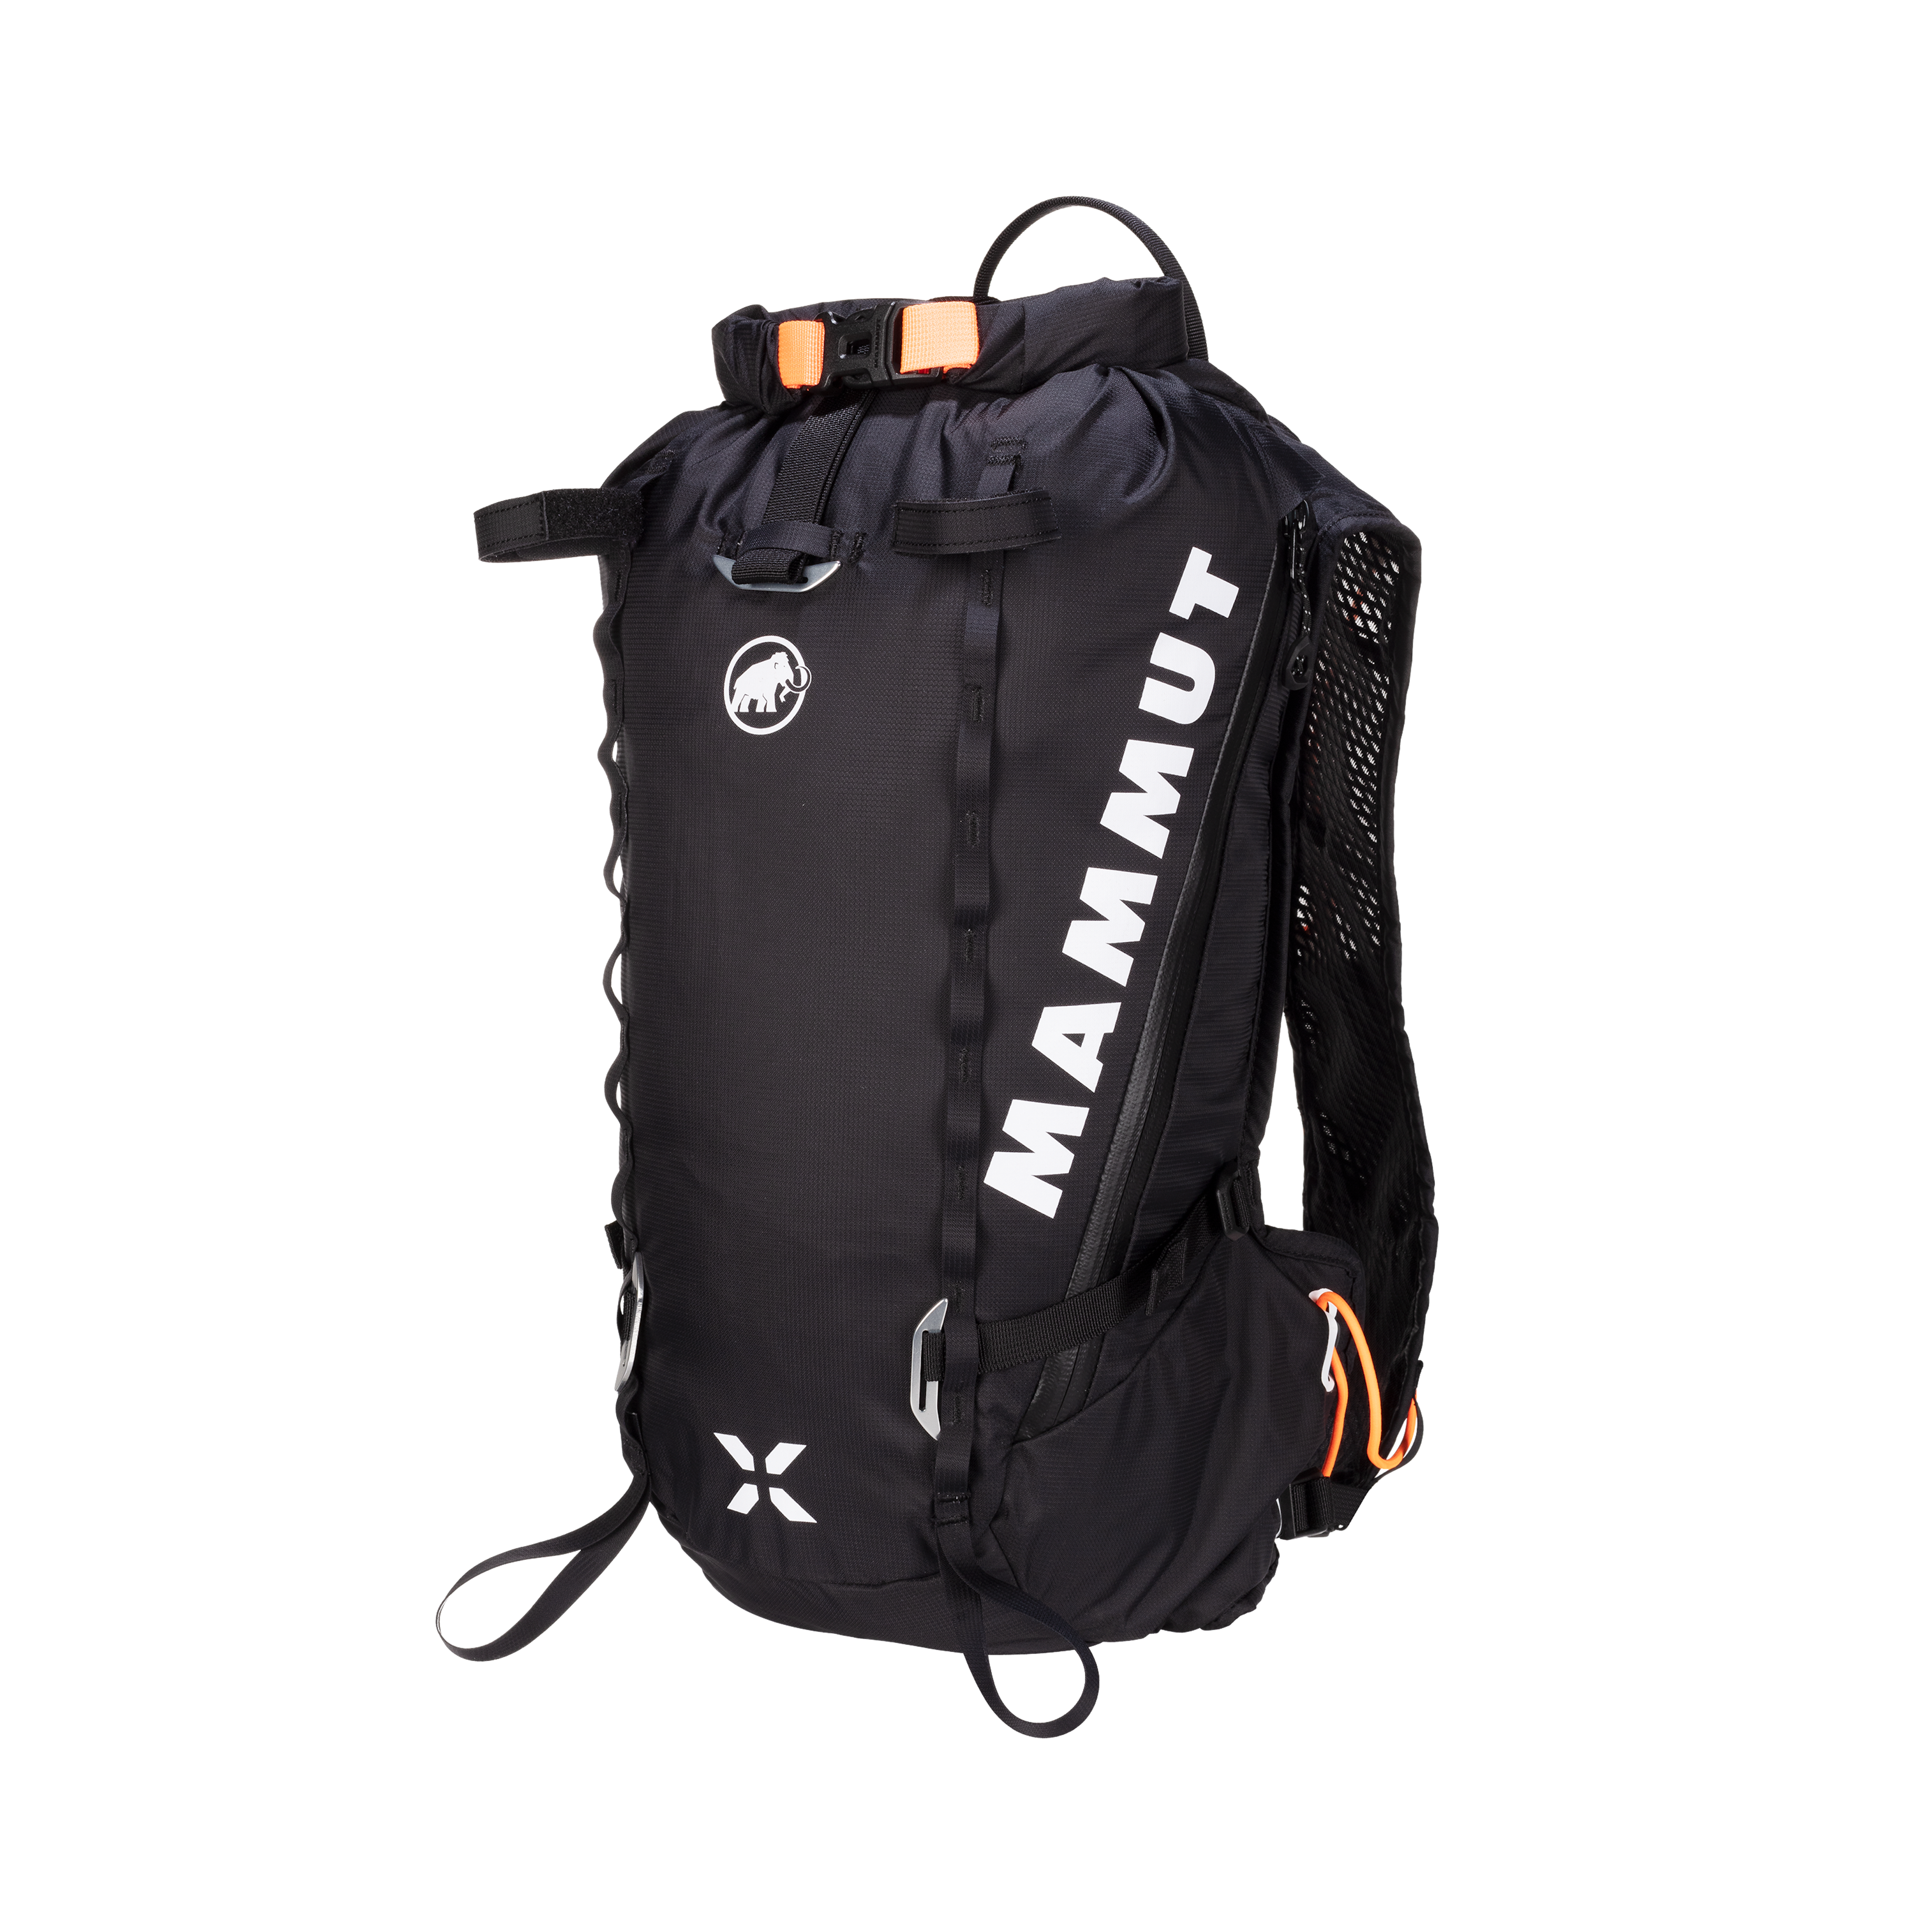 Mammut backpack in black